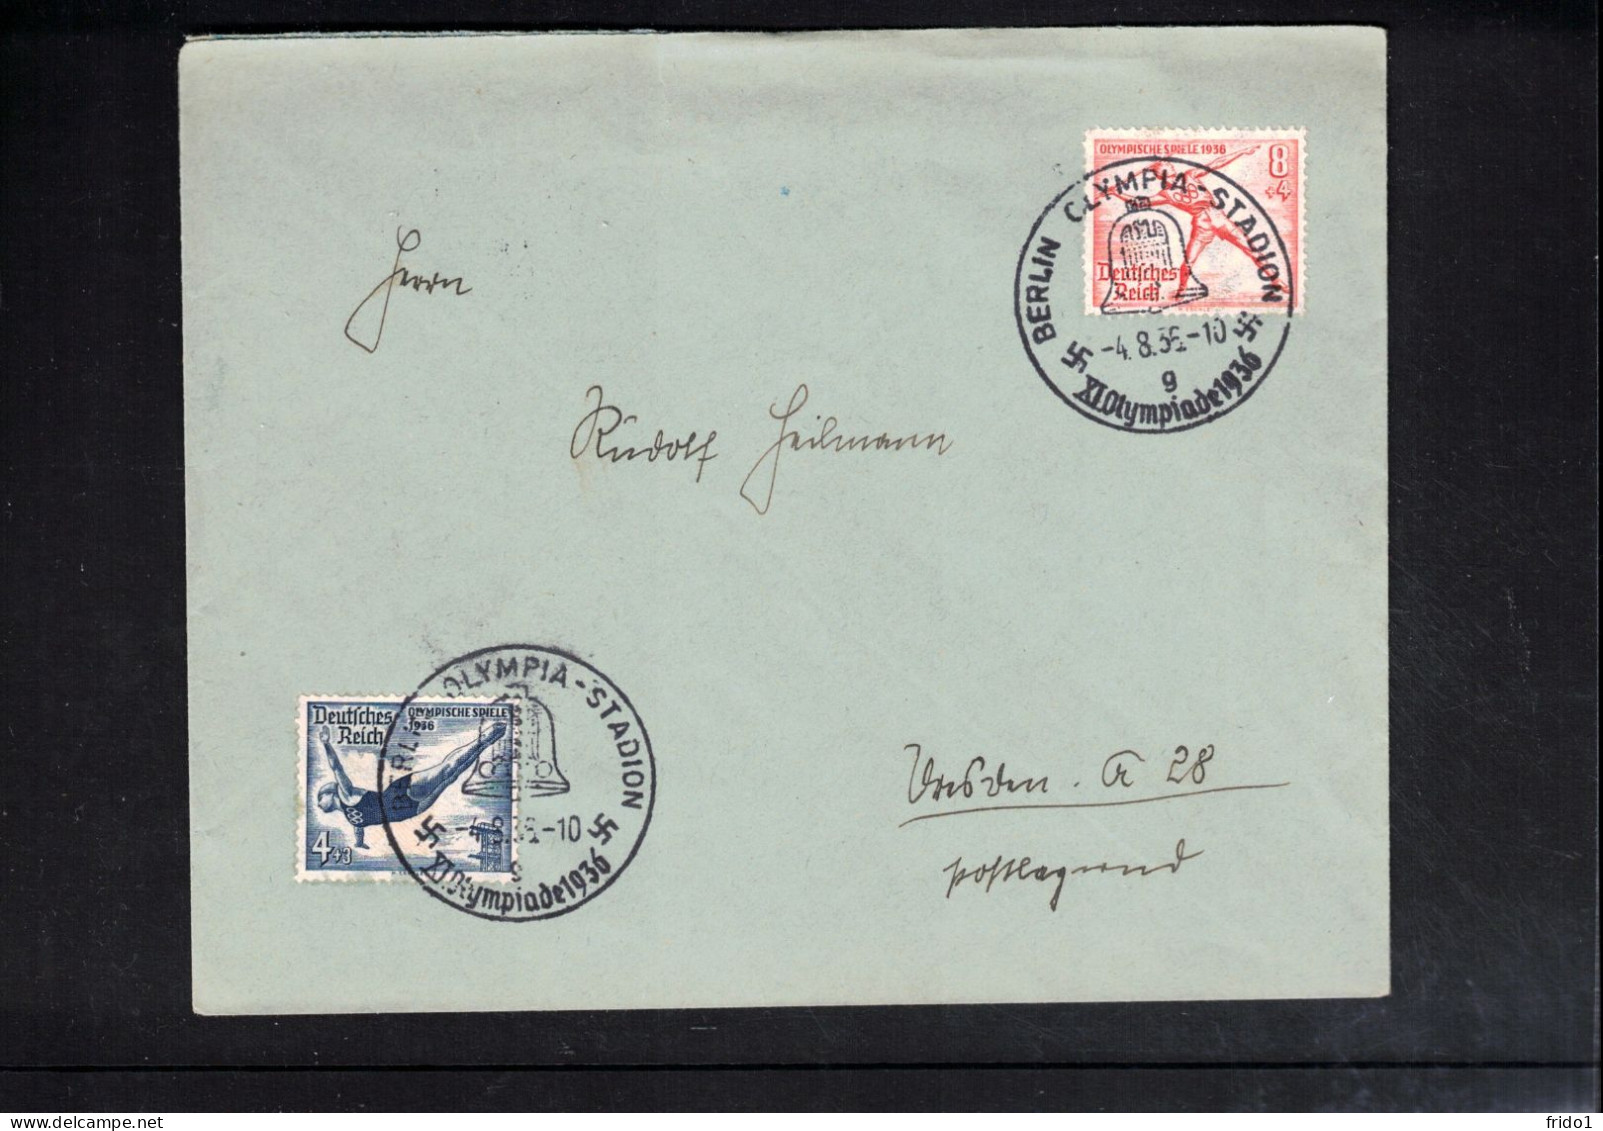 Germany / Deutschland 1936 Olymic Games Berlin Interesting Letter With Postmark Berlin Olympia-Stadion - Sommer 1936: Berlin